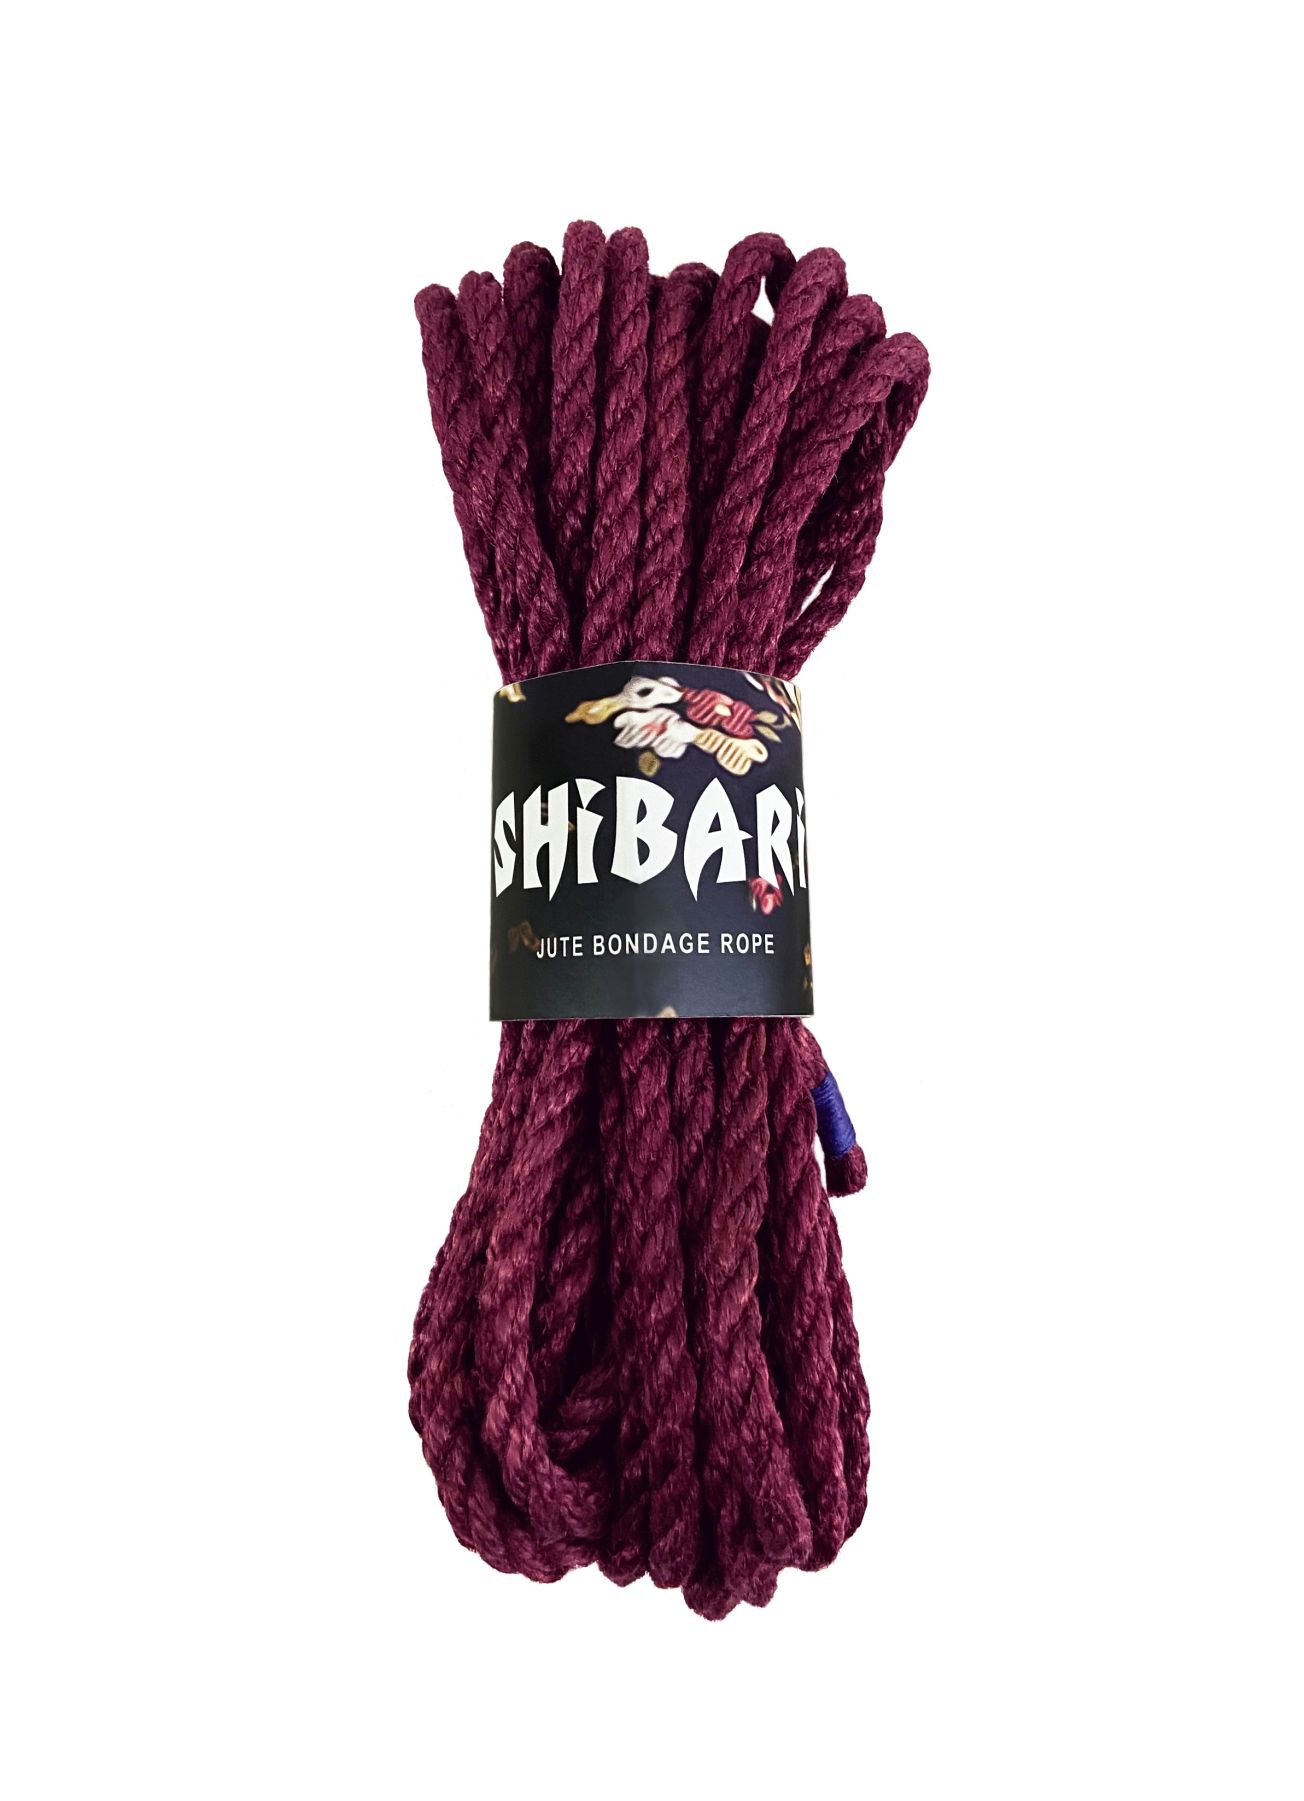 Джутовая вер�евка для Шибари Feral Feelings Shibari Rope, 8 м фиолетовая